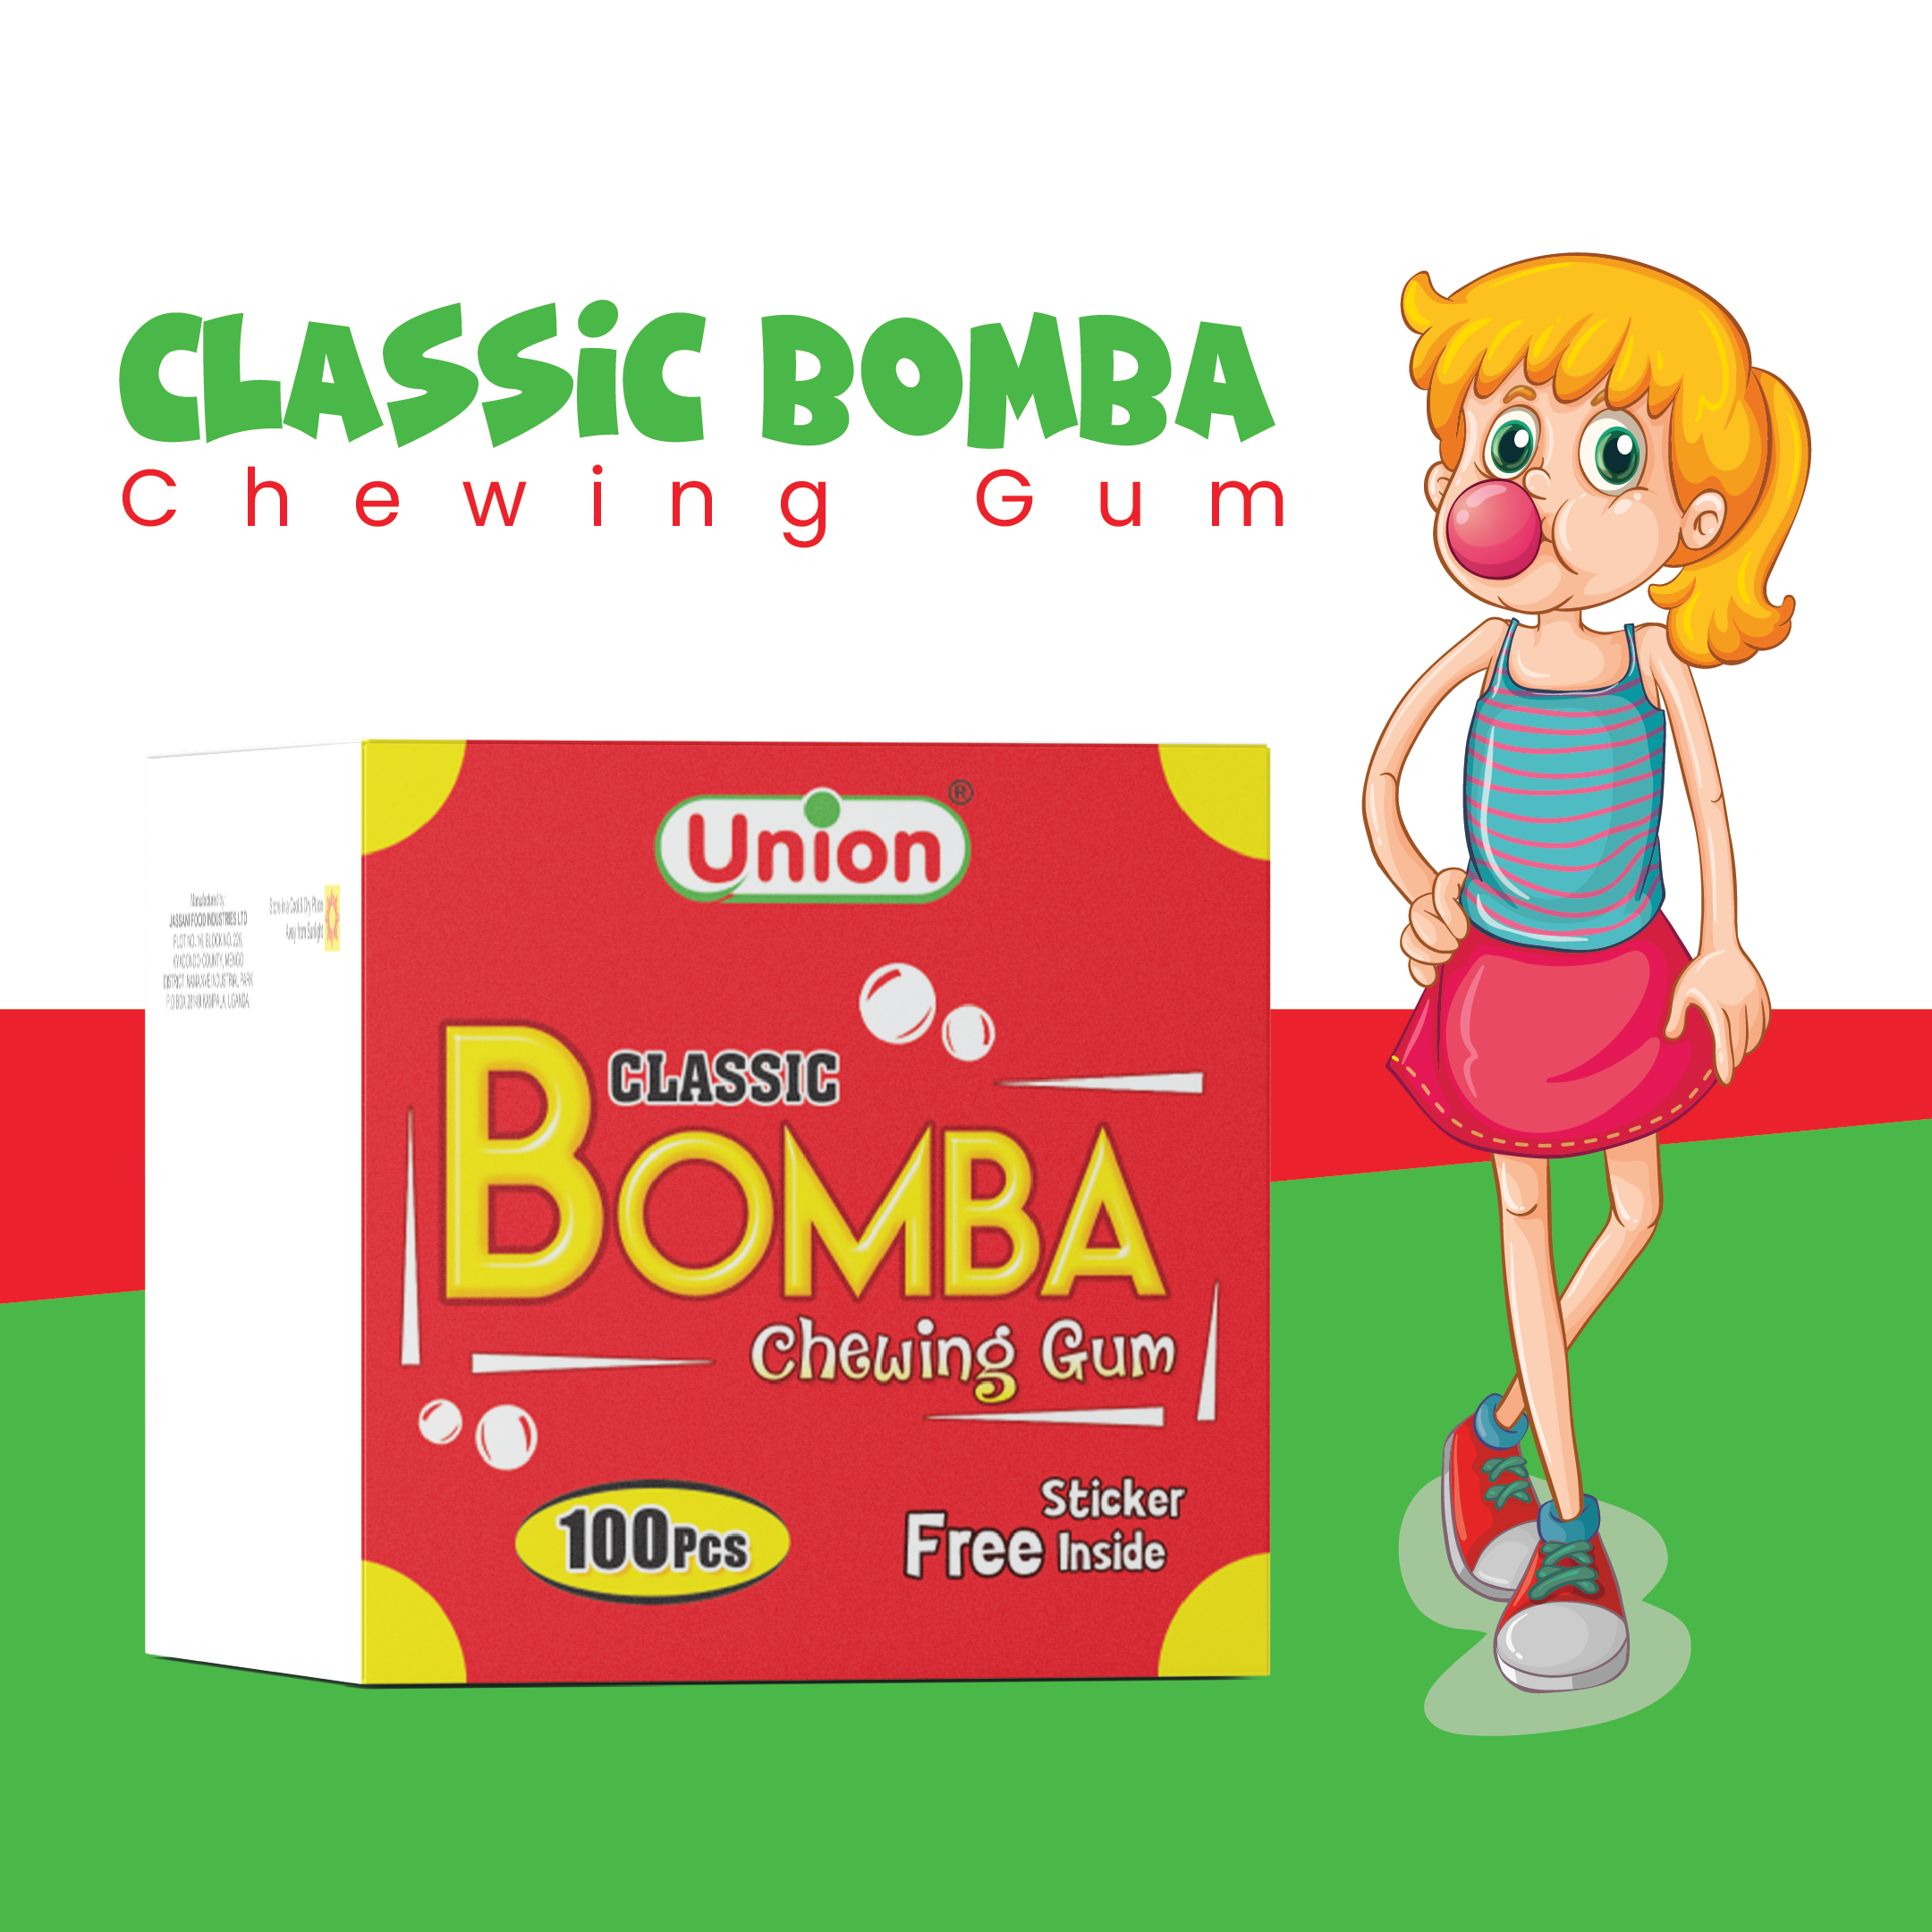 Union Classic Bomba Chewing Gum